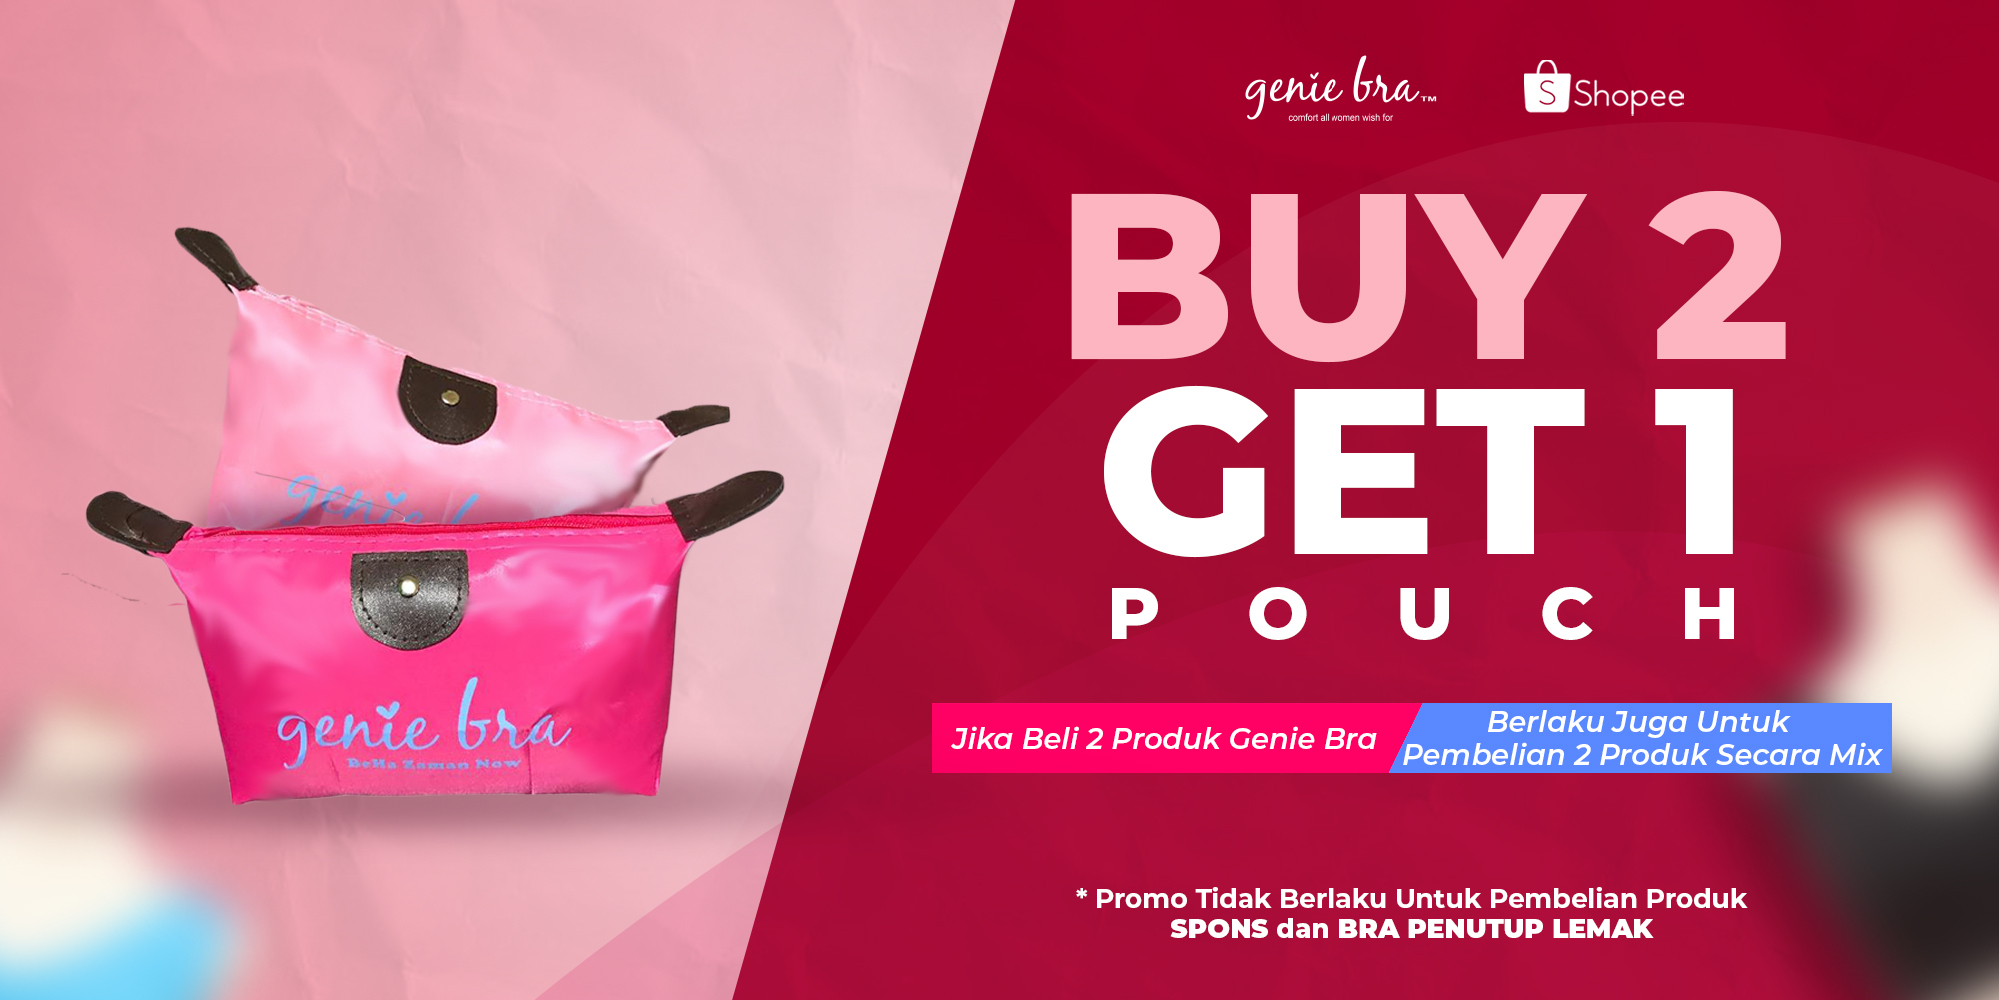 Genie Bra Official Shop - Produk Resmi & Terlengkap, GoPayLater Cicil 0%